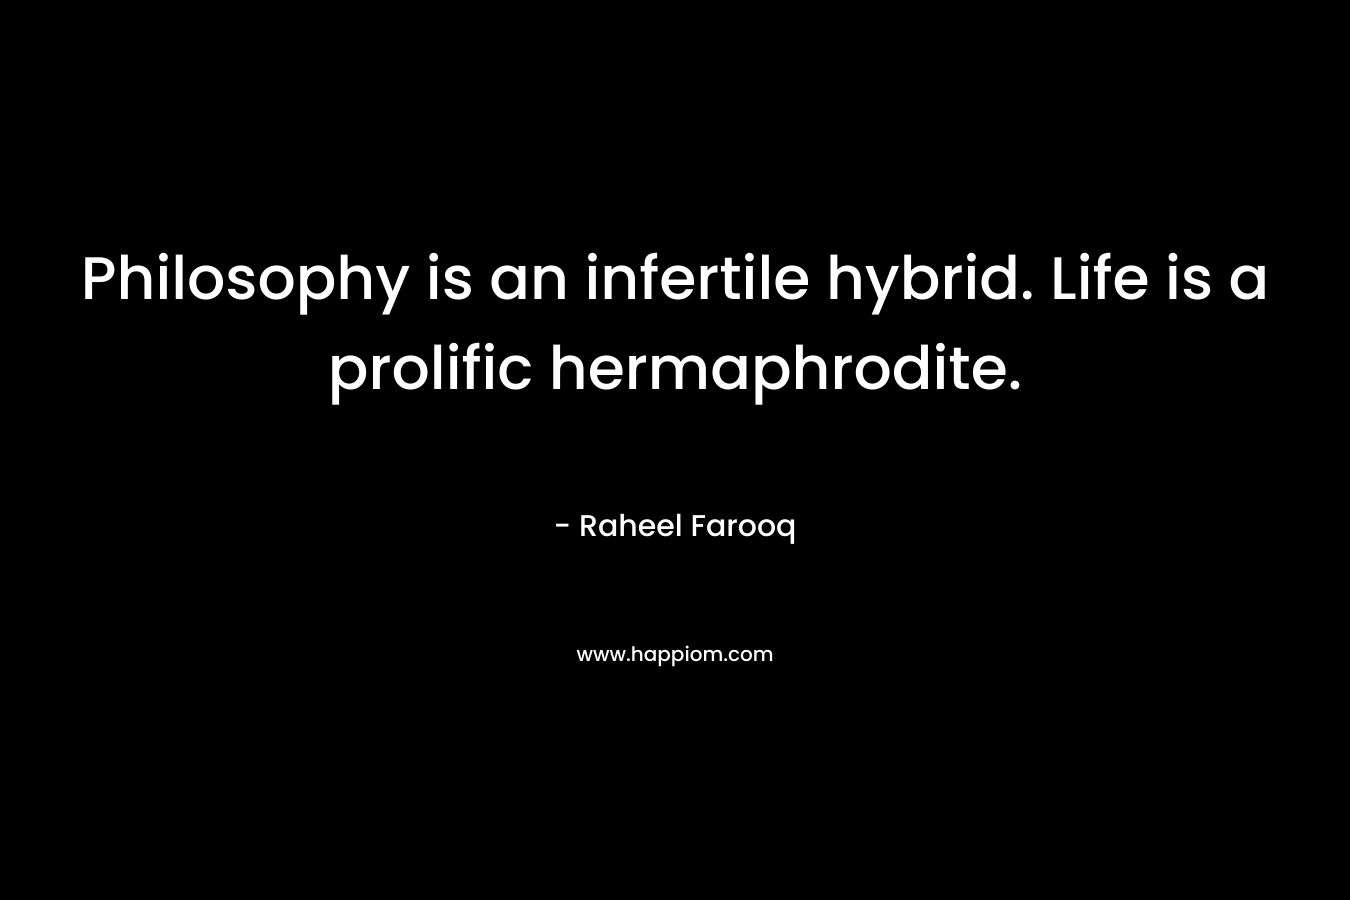 Philosophy is an infertile hybrid. Life is a prolific hermaphrodite.